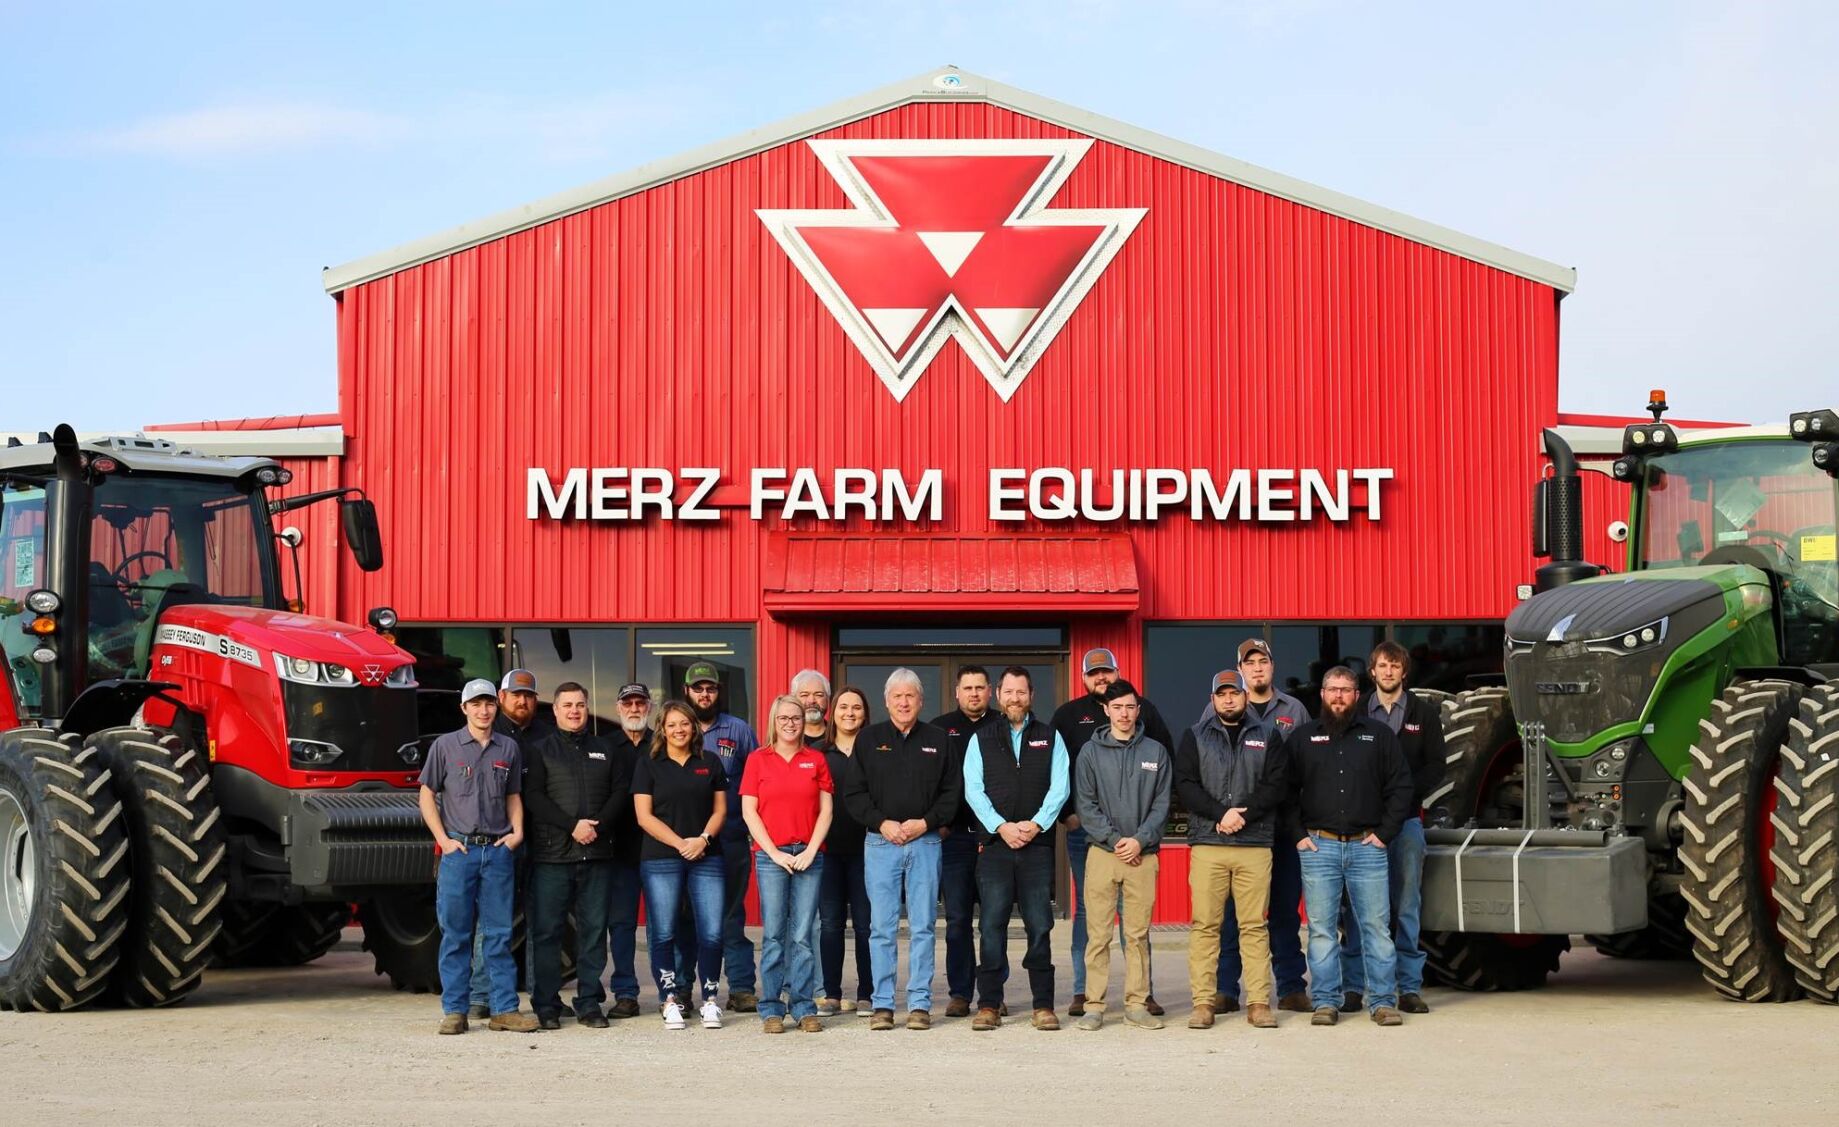 Merz Farm Equipment celebrates over 70 years in business News greenacressells